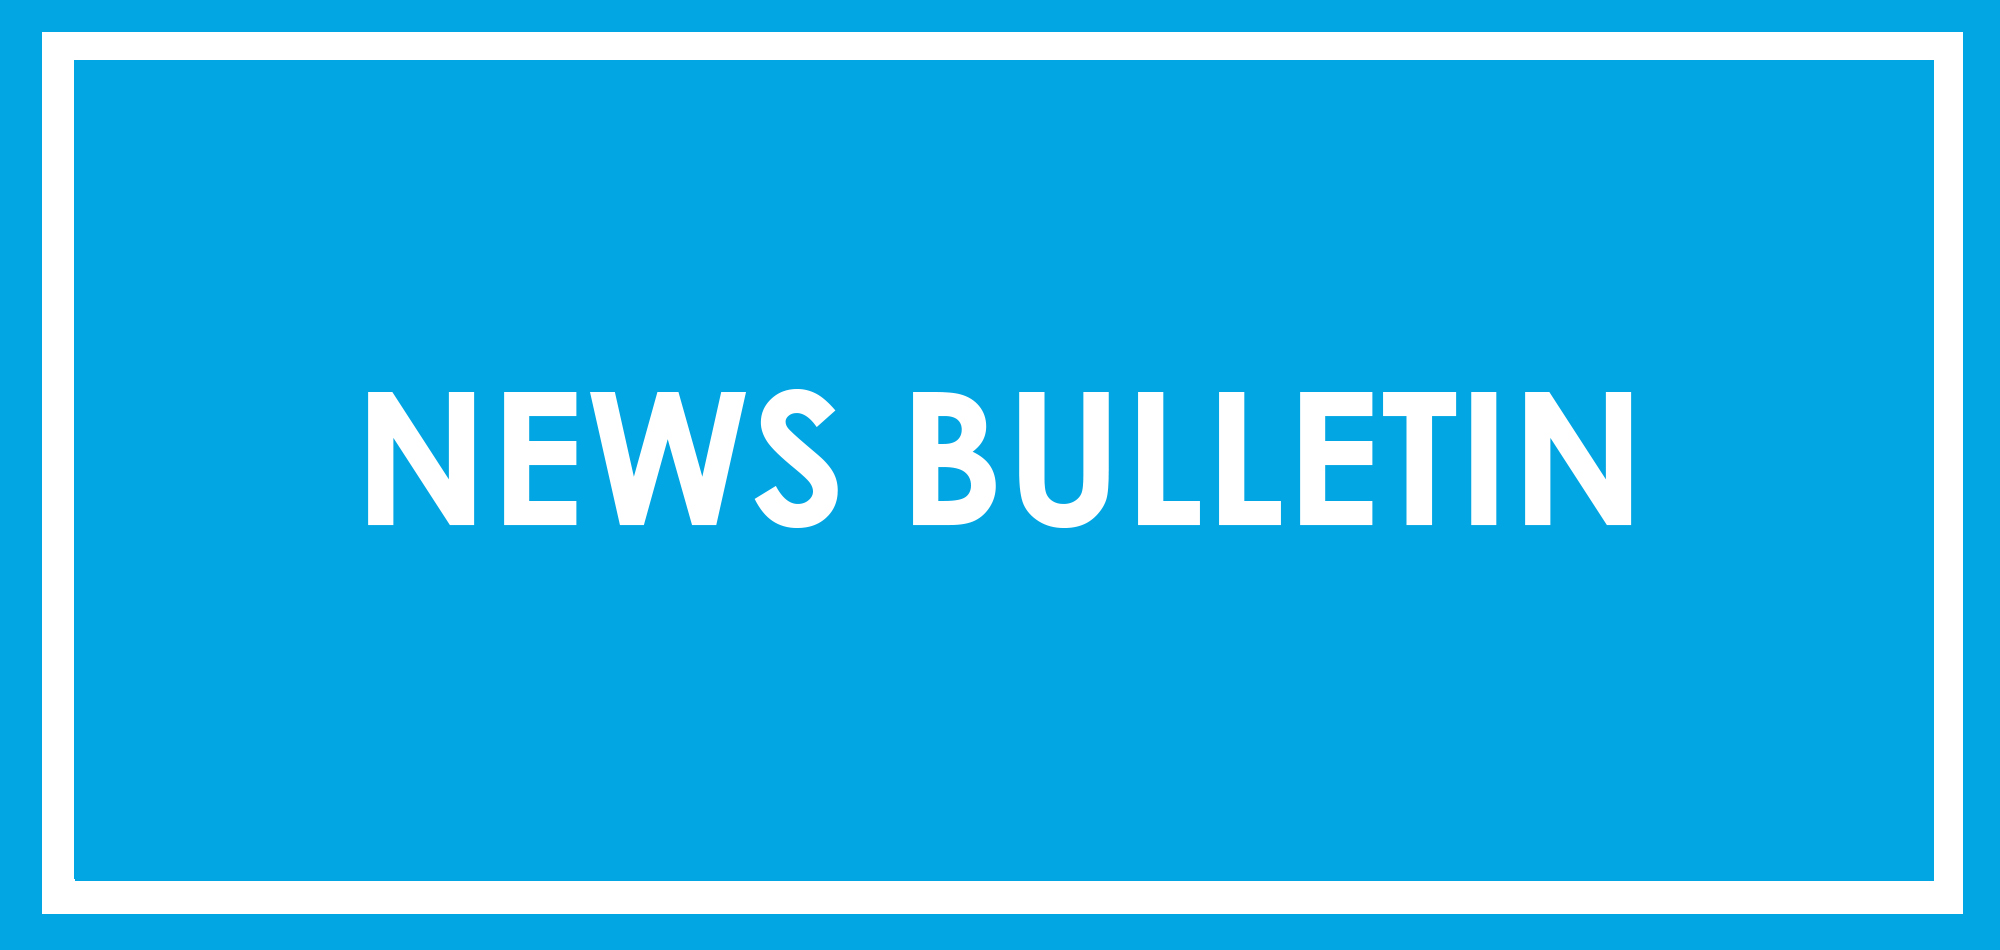 News Bulletin - 21.11.21